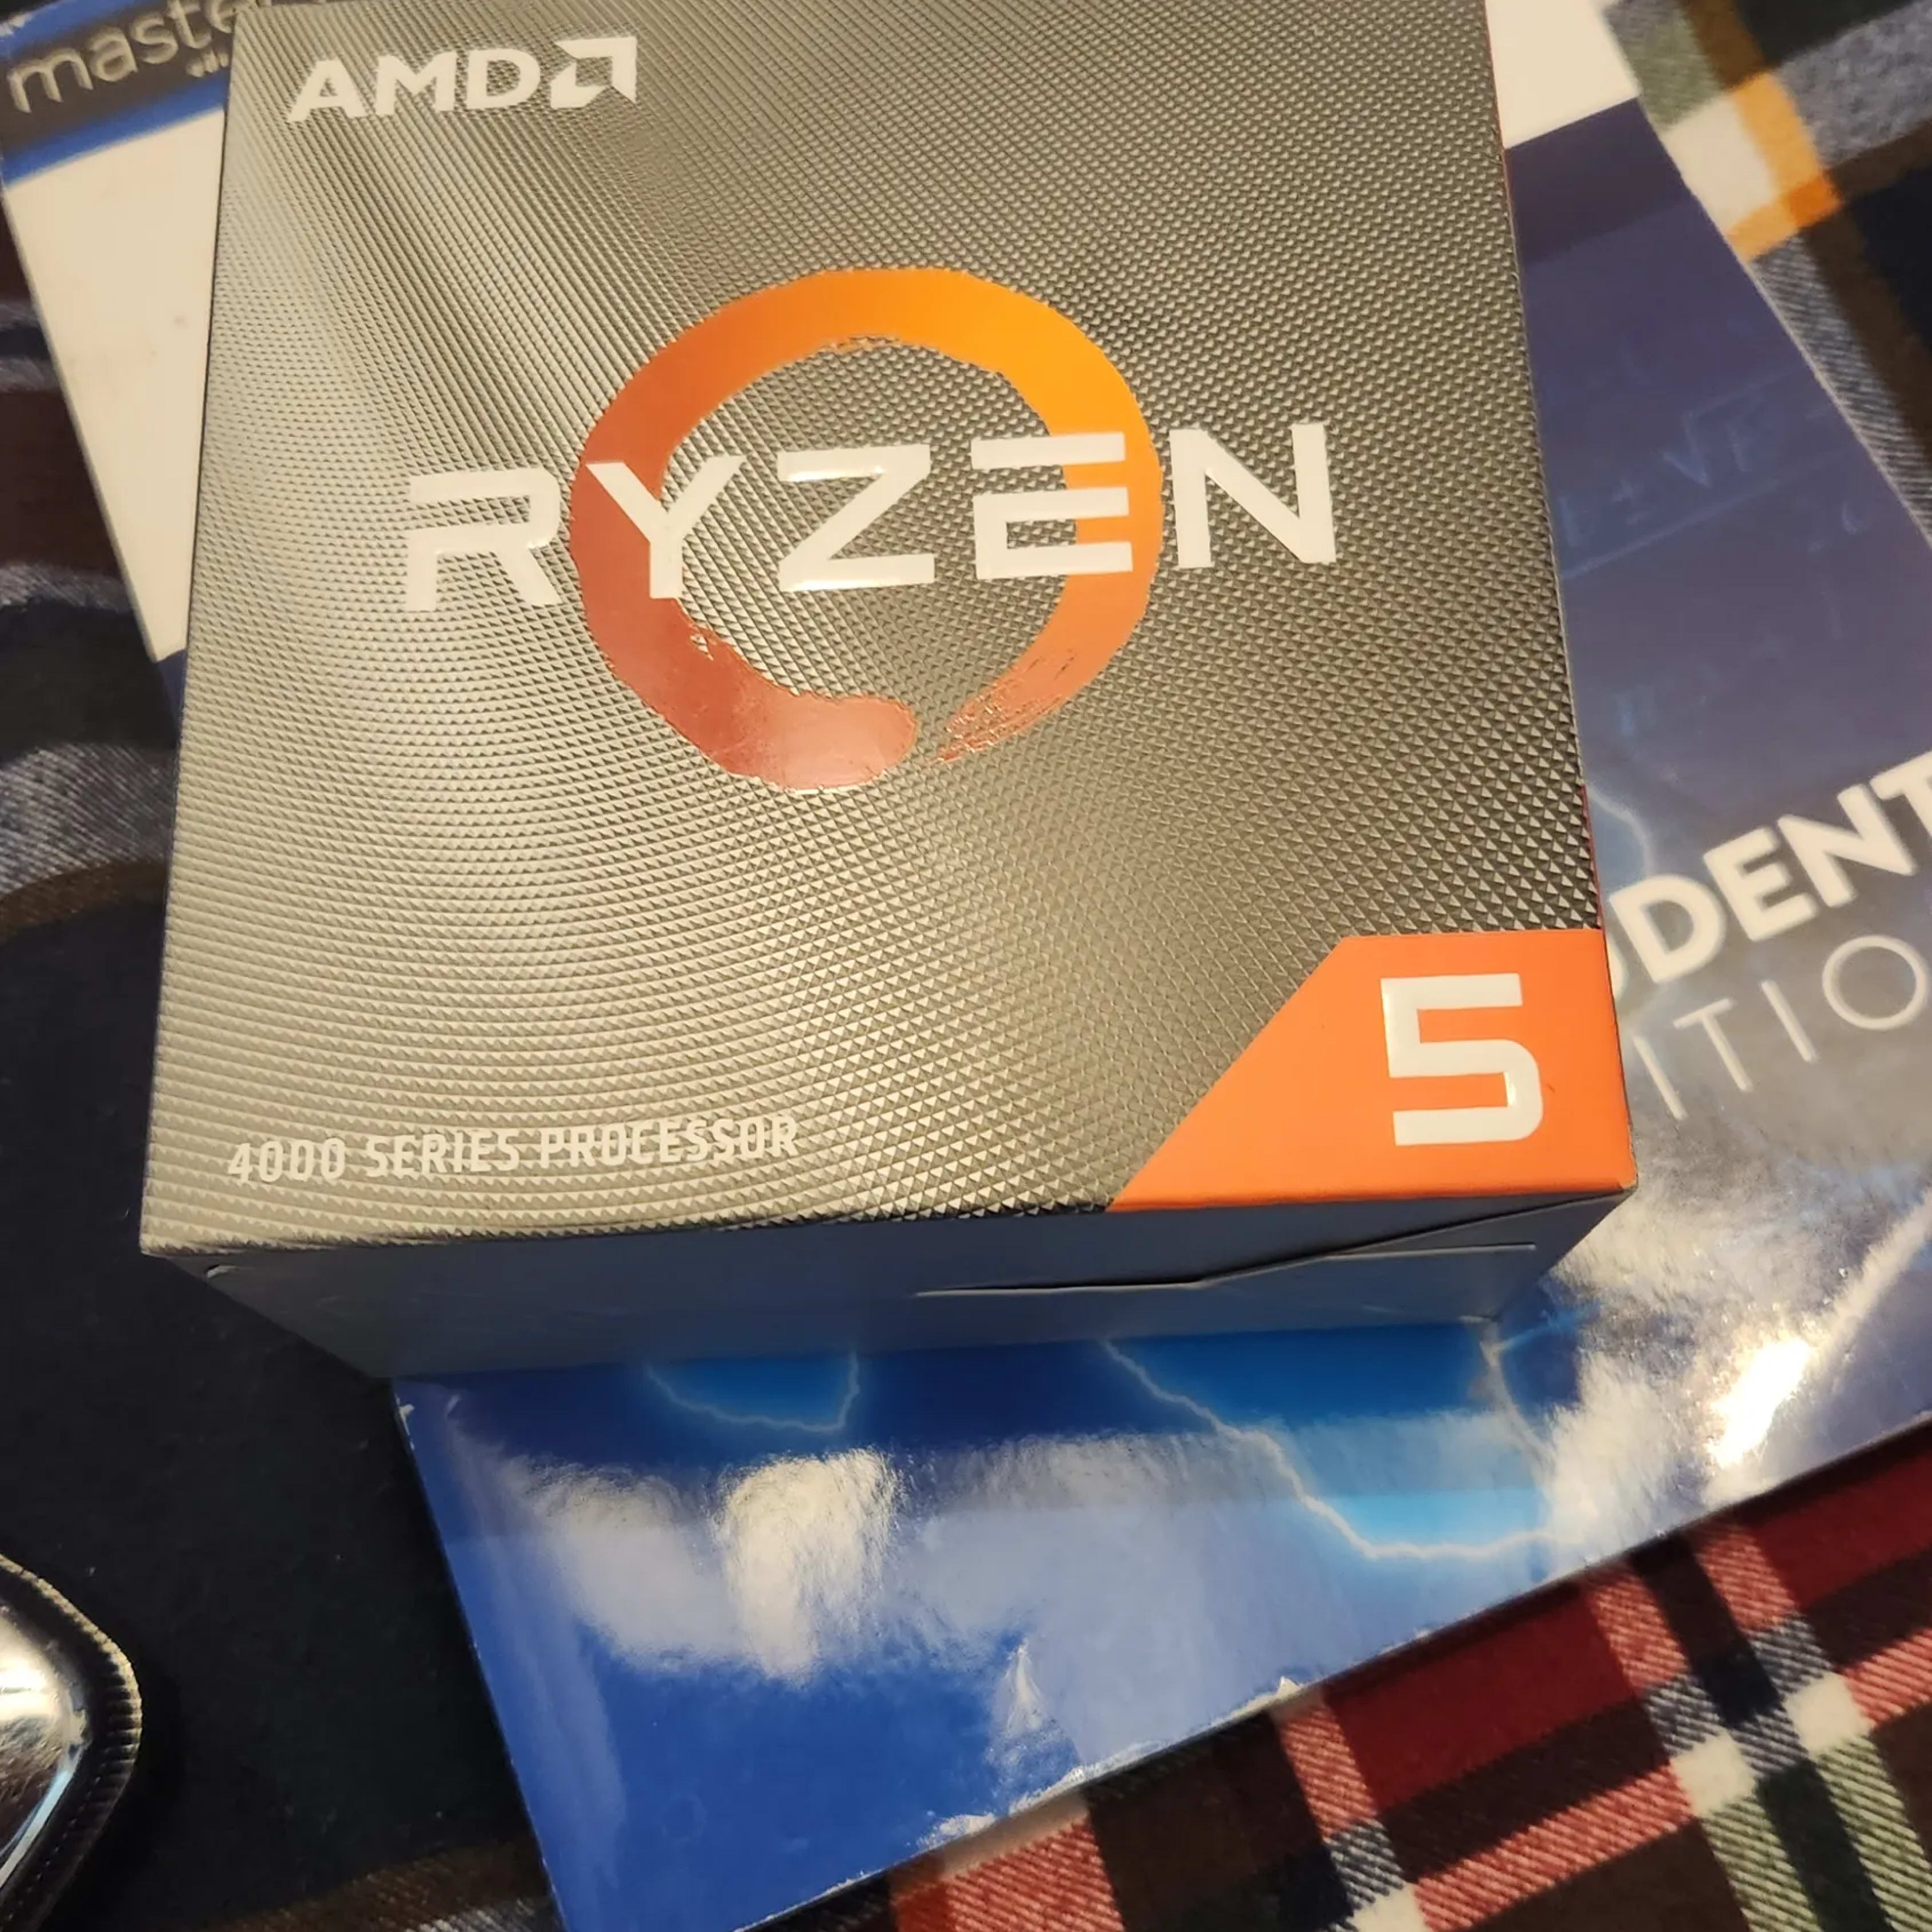 AMD Ryzen™ 5 4500 Desktop Processors - Darin Gaming